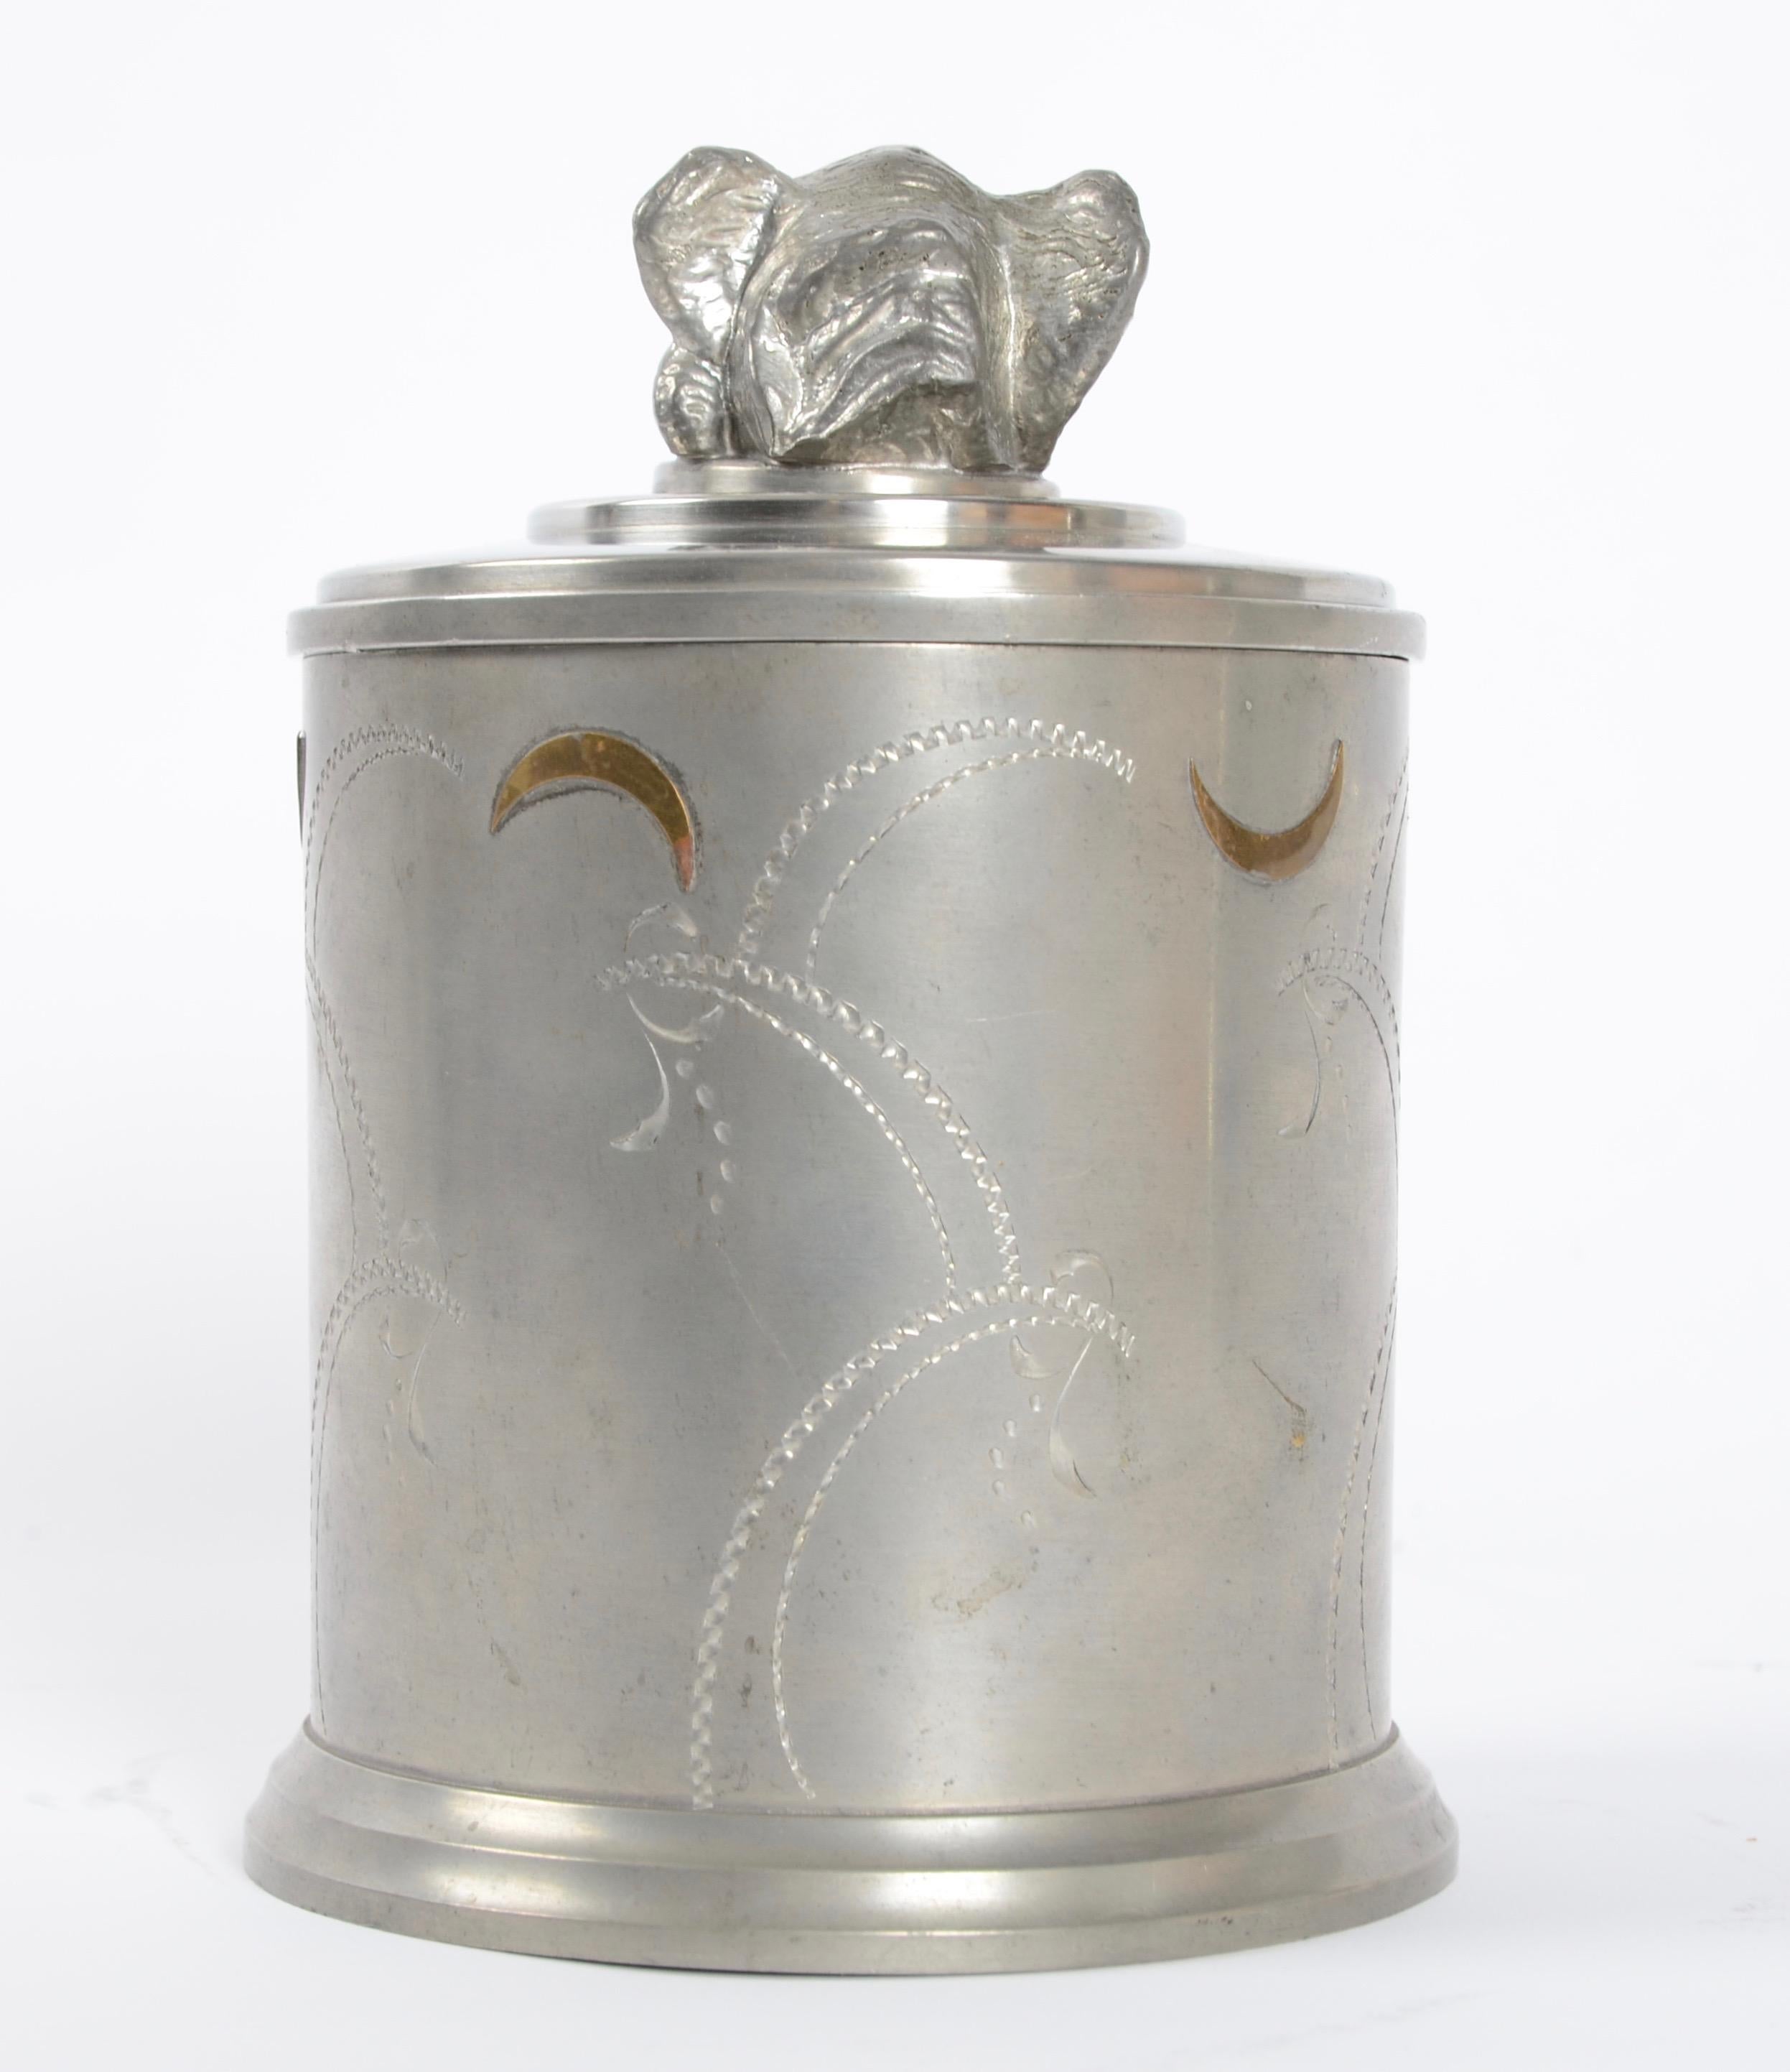 Jar in pewter and brass, lid with decor in shape of elephants head. Marked: Prima Svenskt Tenn, Handarbete/handmade, Stockholm D8 (1930).